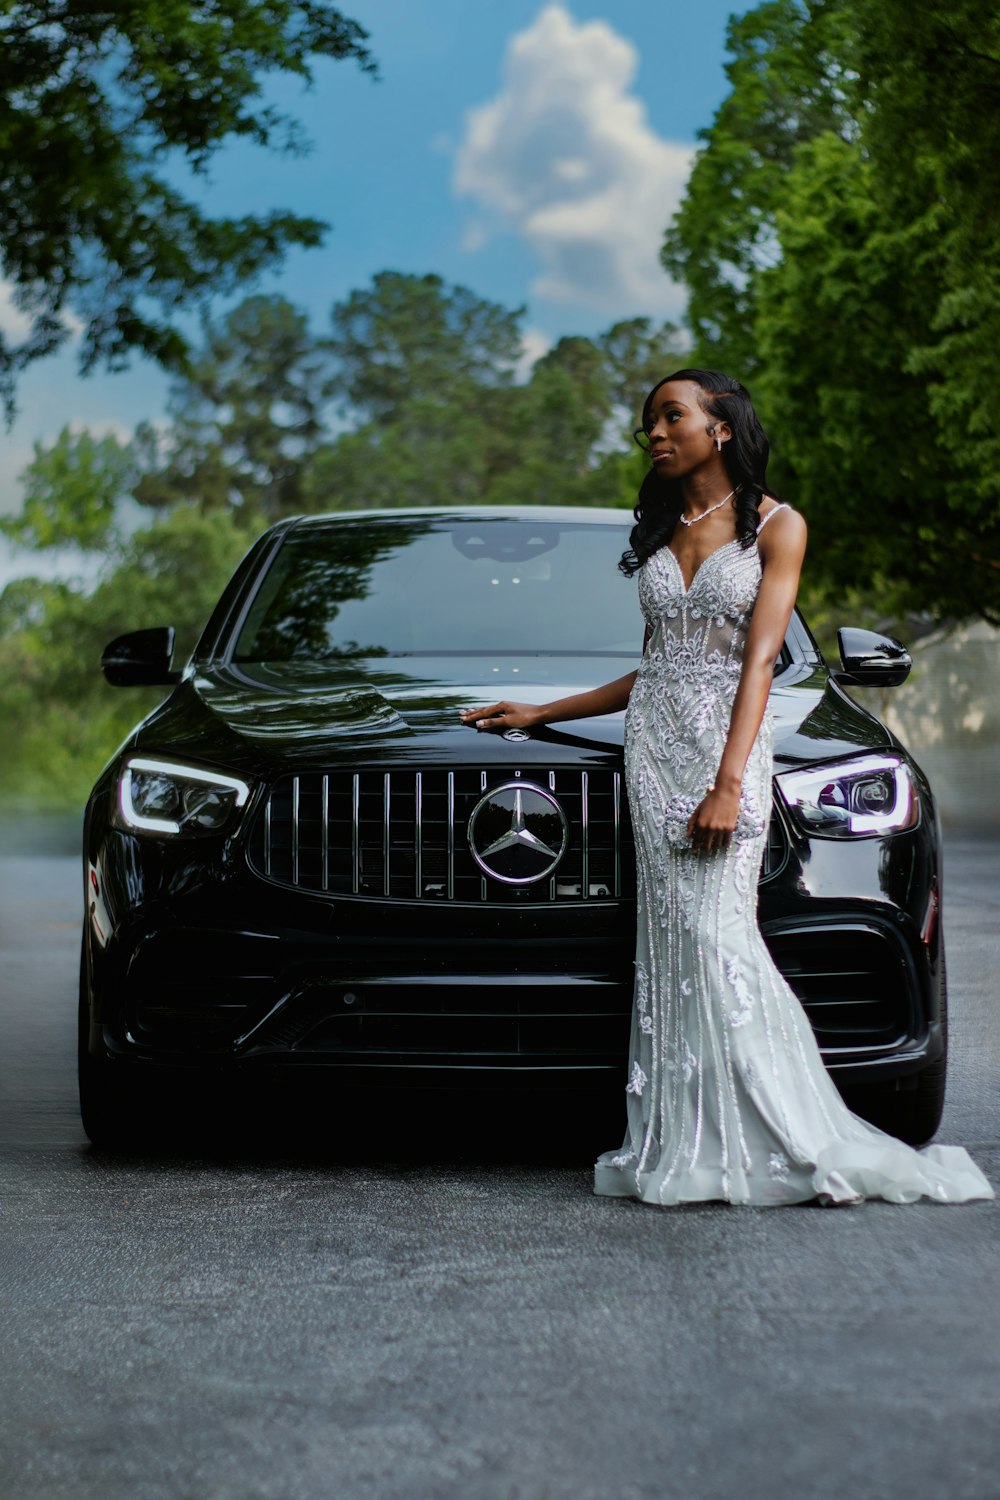 a woman standing next to a black car